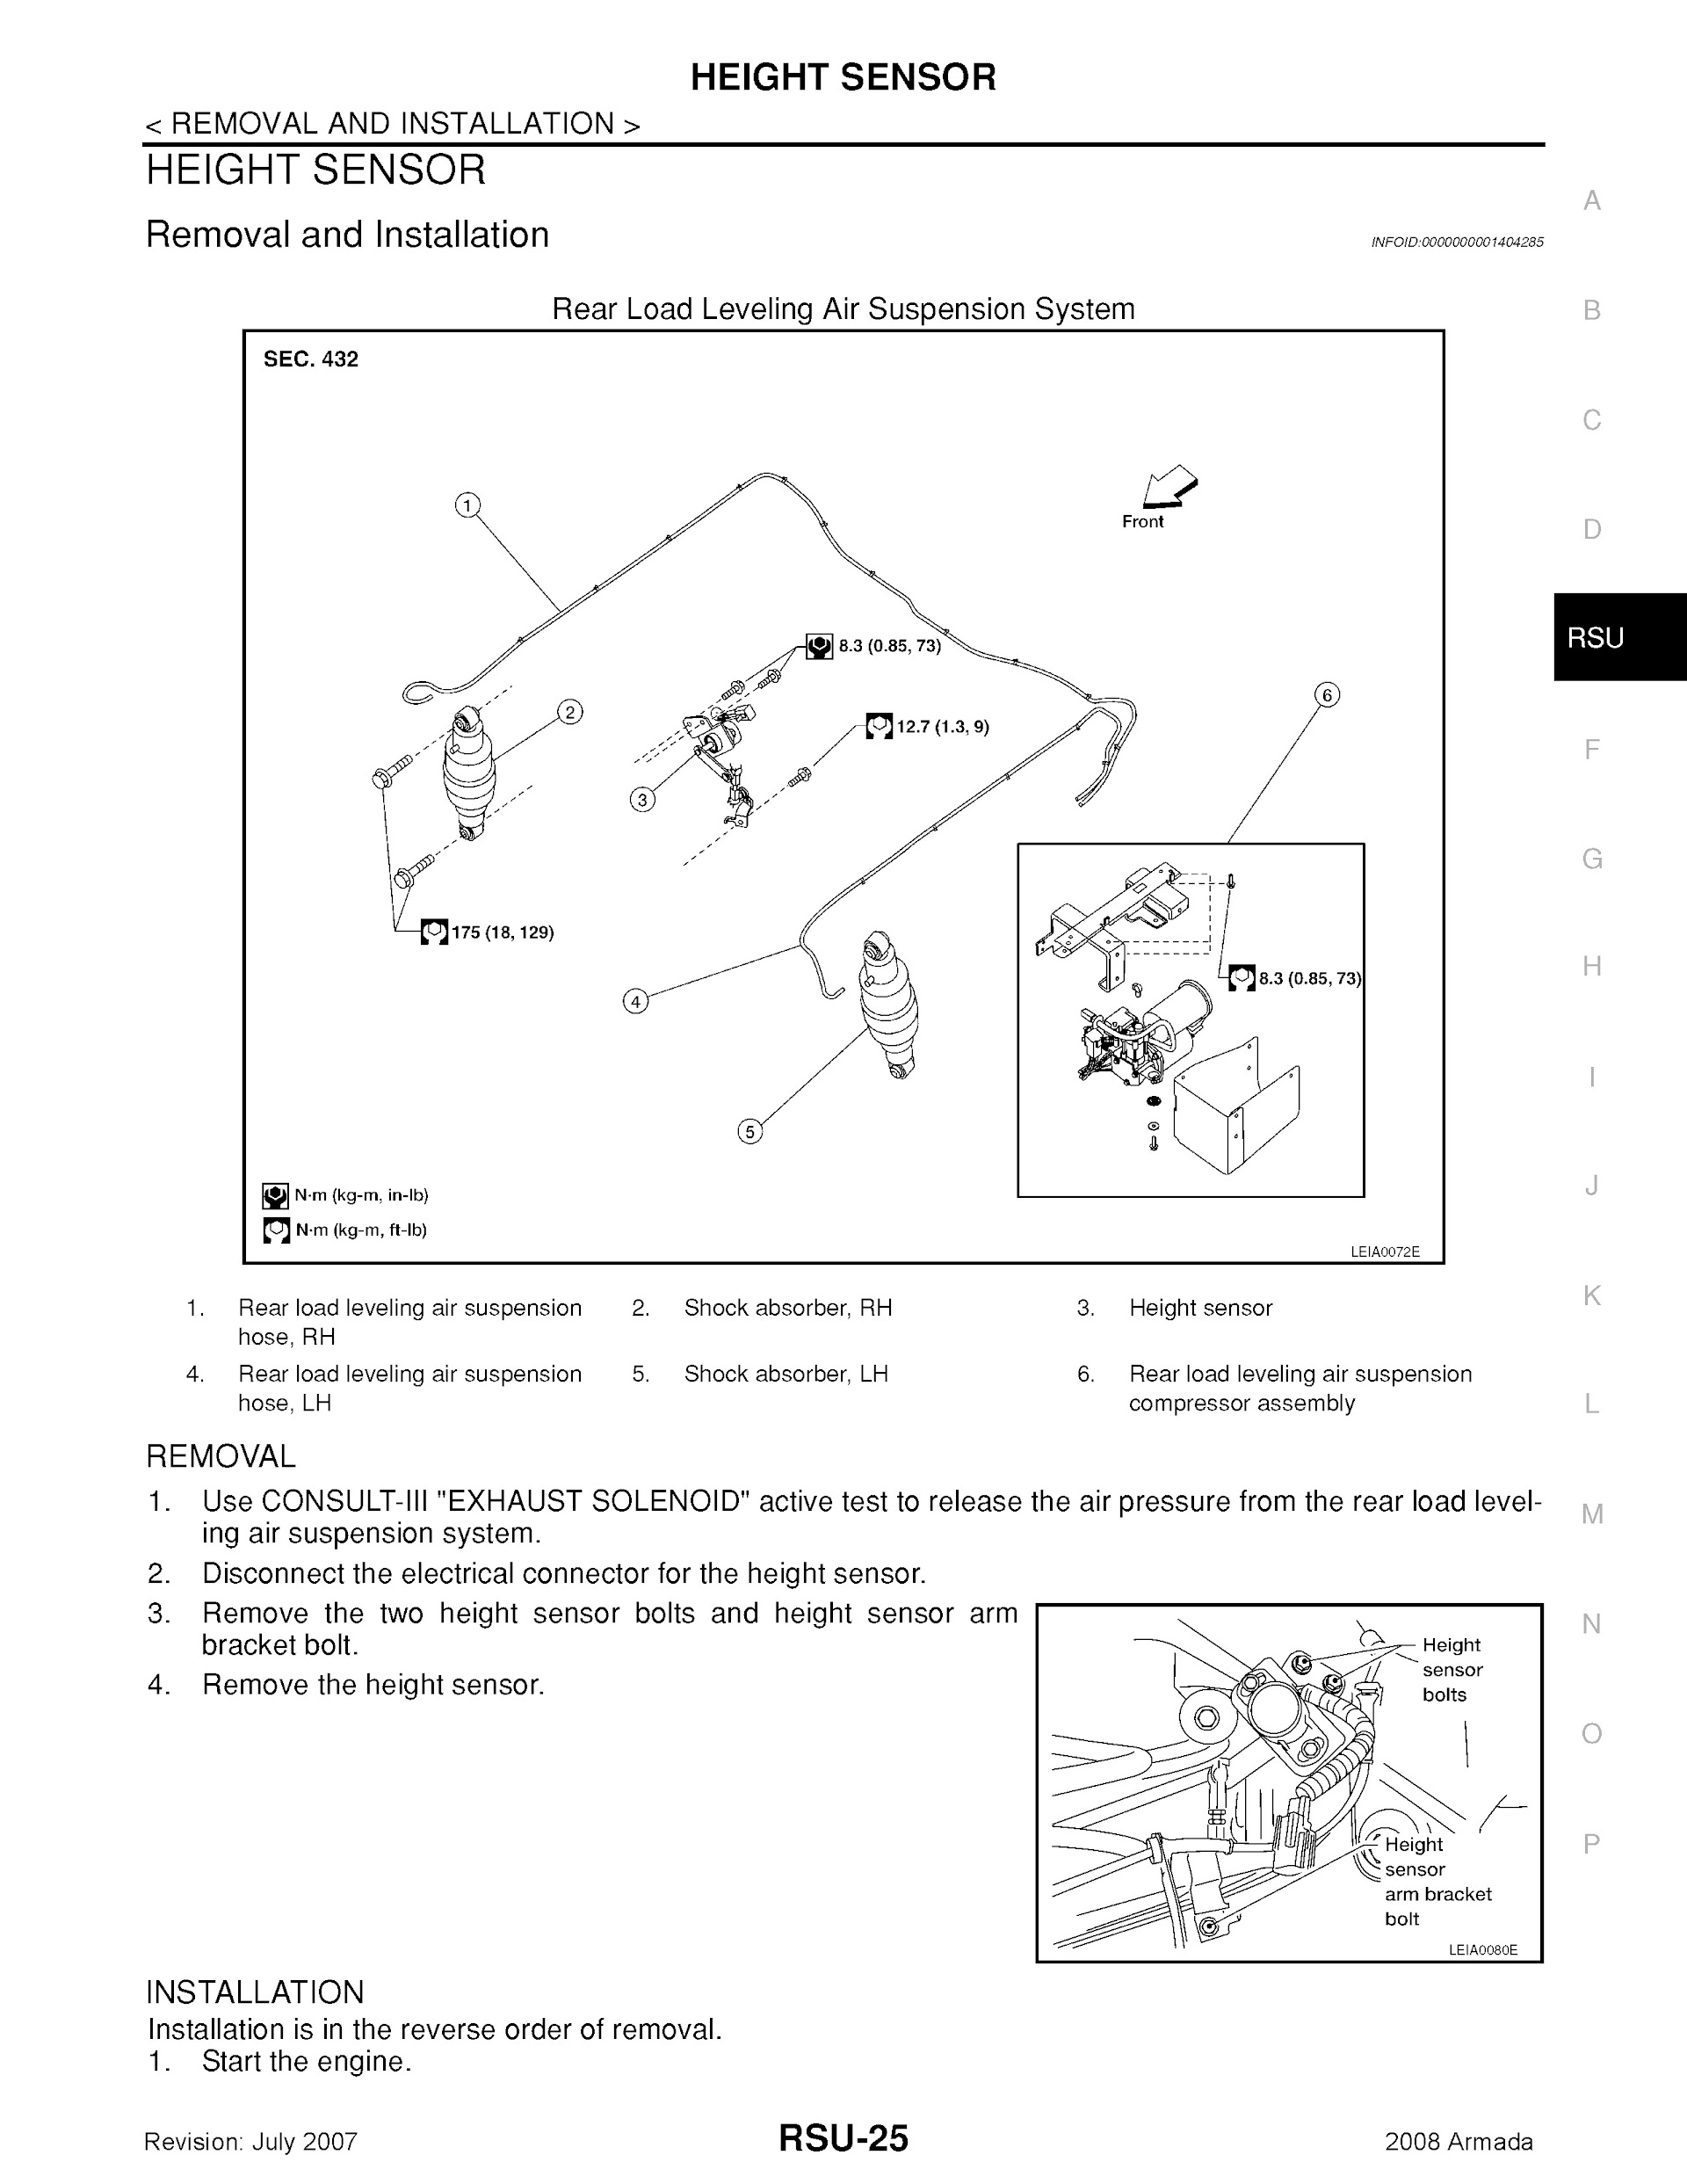 2008 Nissan Armada Repair Manual, Height Sensor